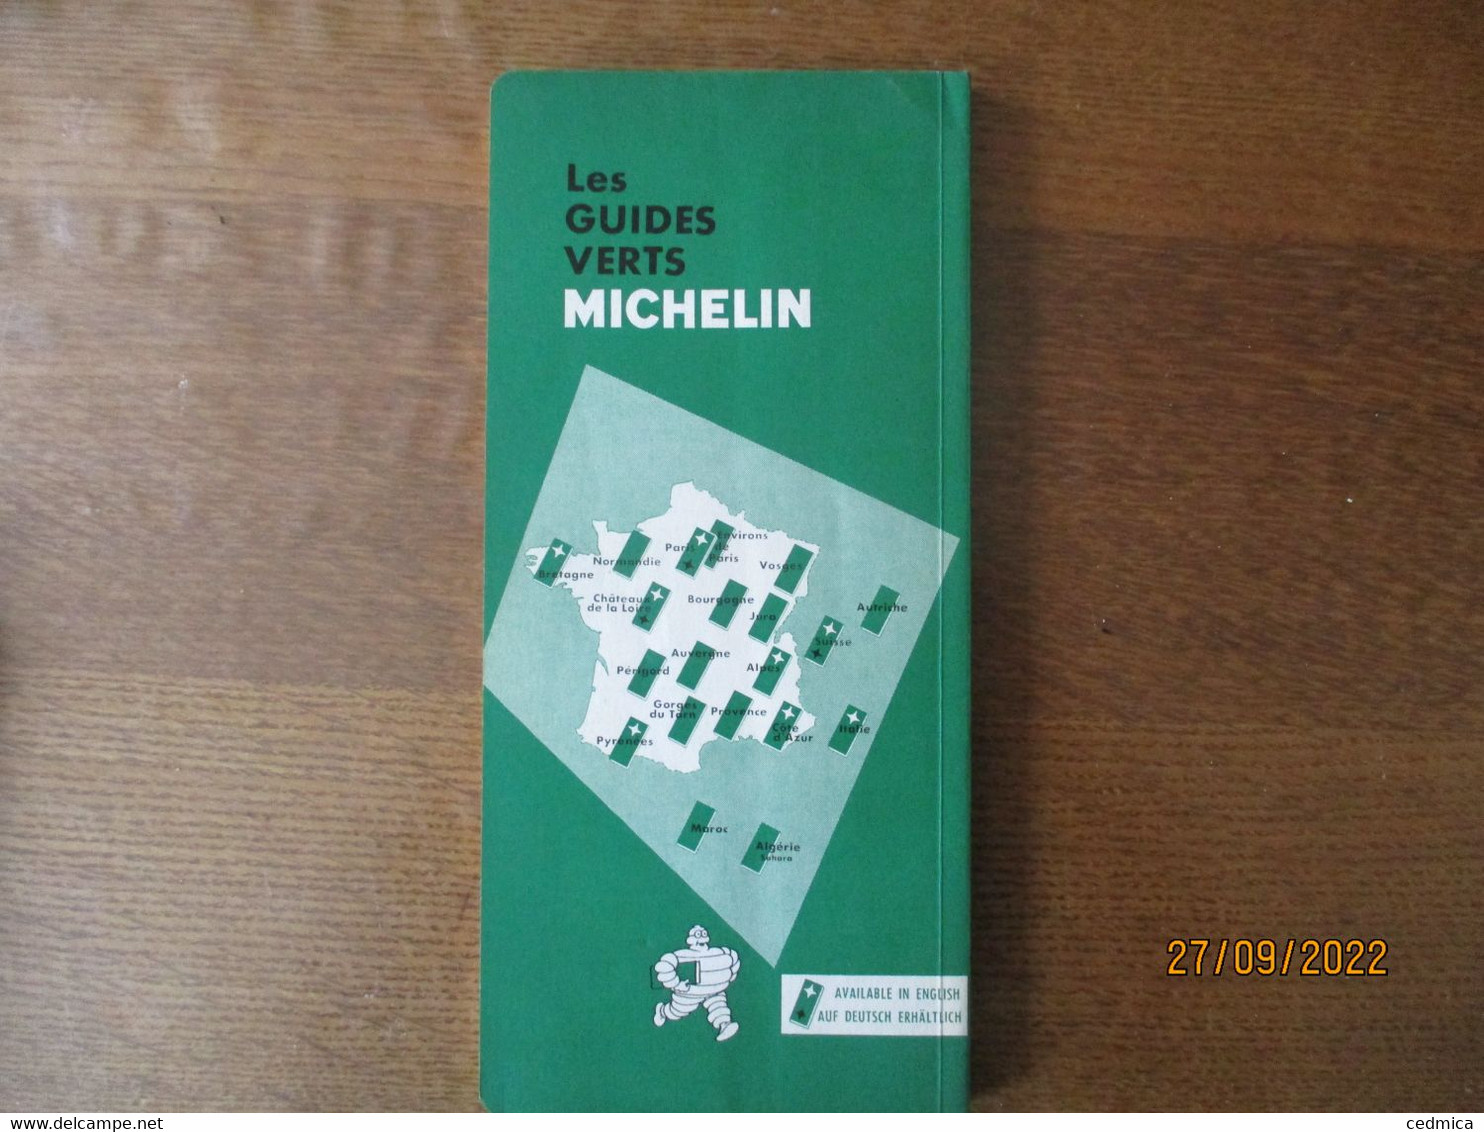 GUIDE DU PNEU MICHELIN ALPES SAVOIE-DAUPHINE 19e EDITION - Michelin (guides)